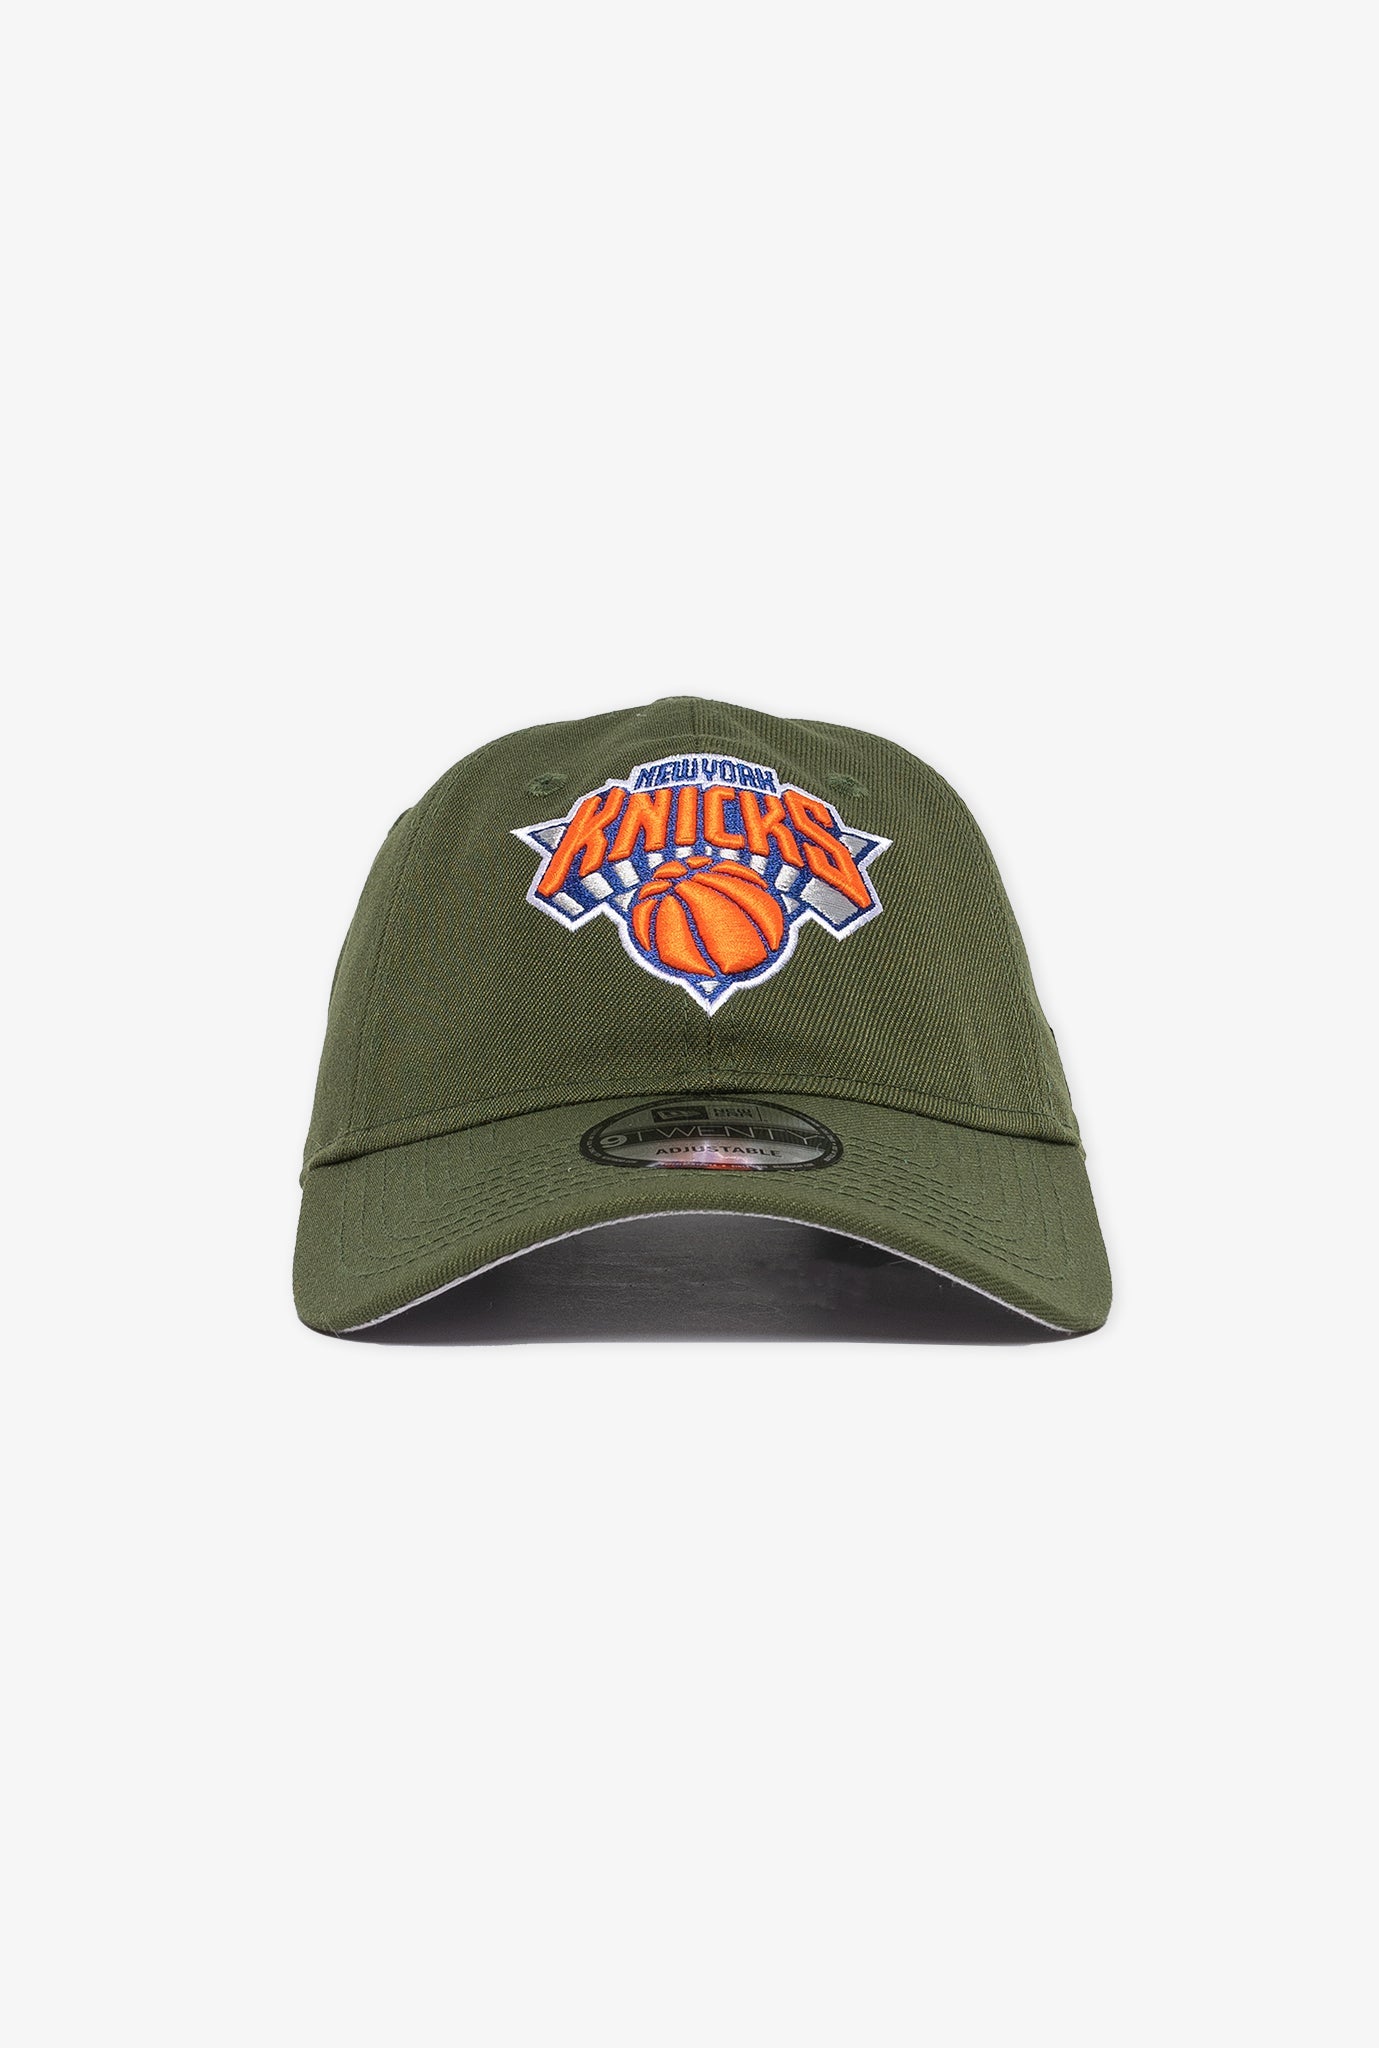 New York Knicks 9TWENTY Cap - Rifle Green